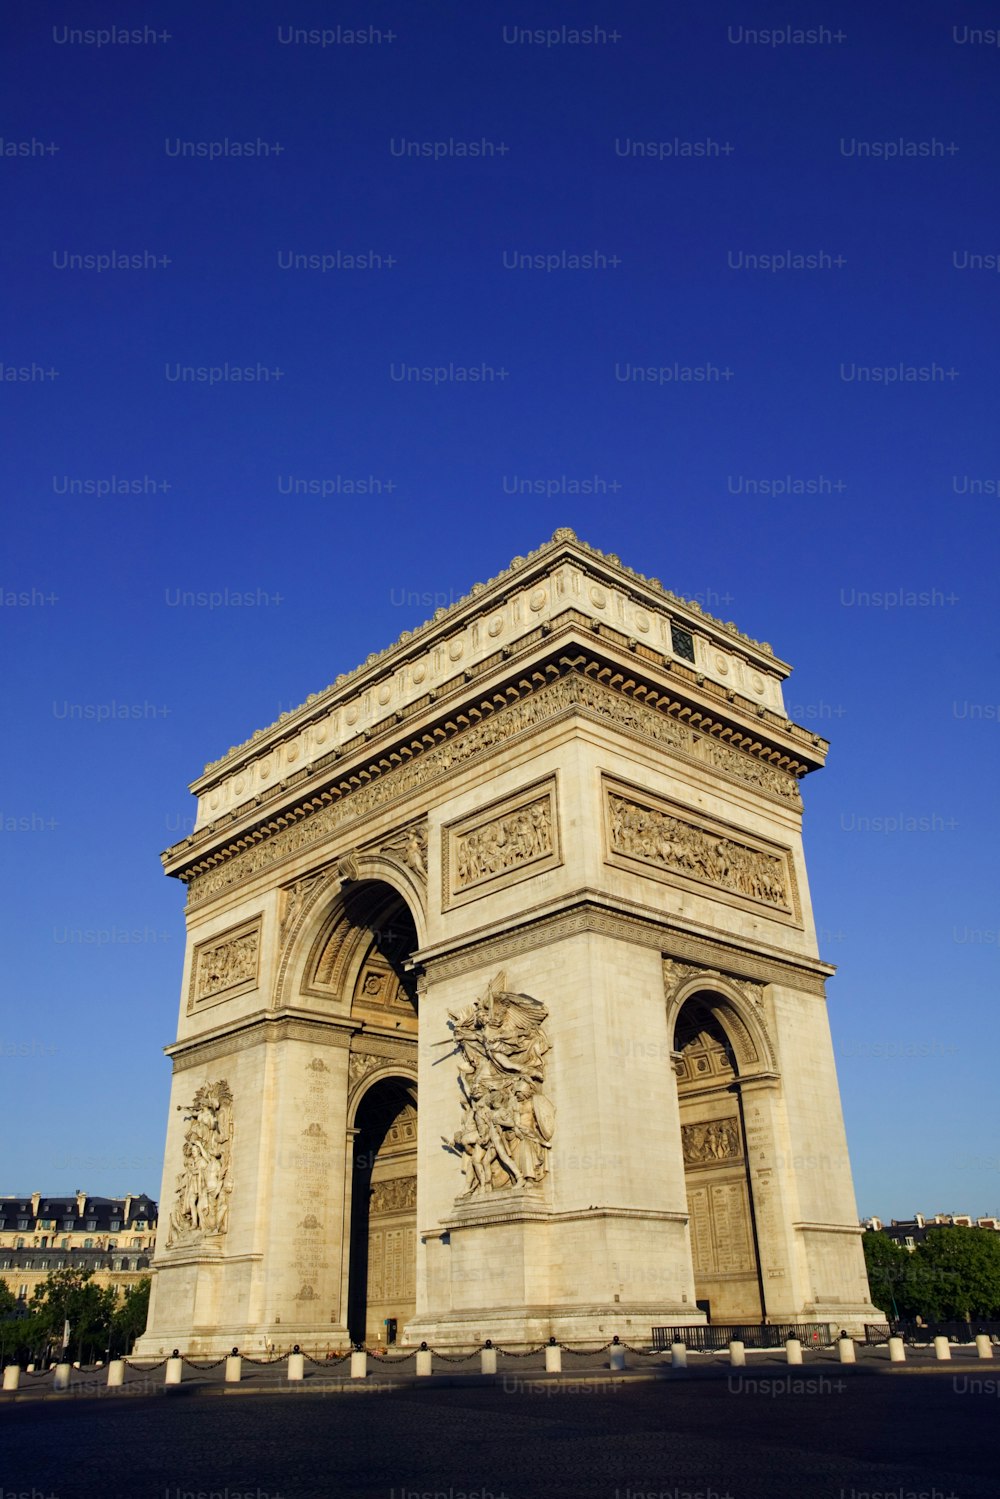 the arc of triumph in paris against a blue sky